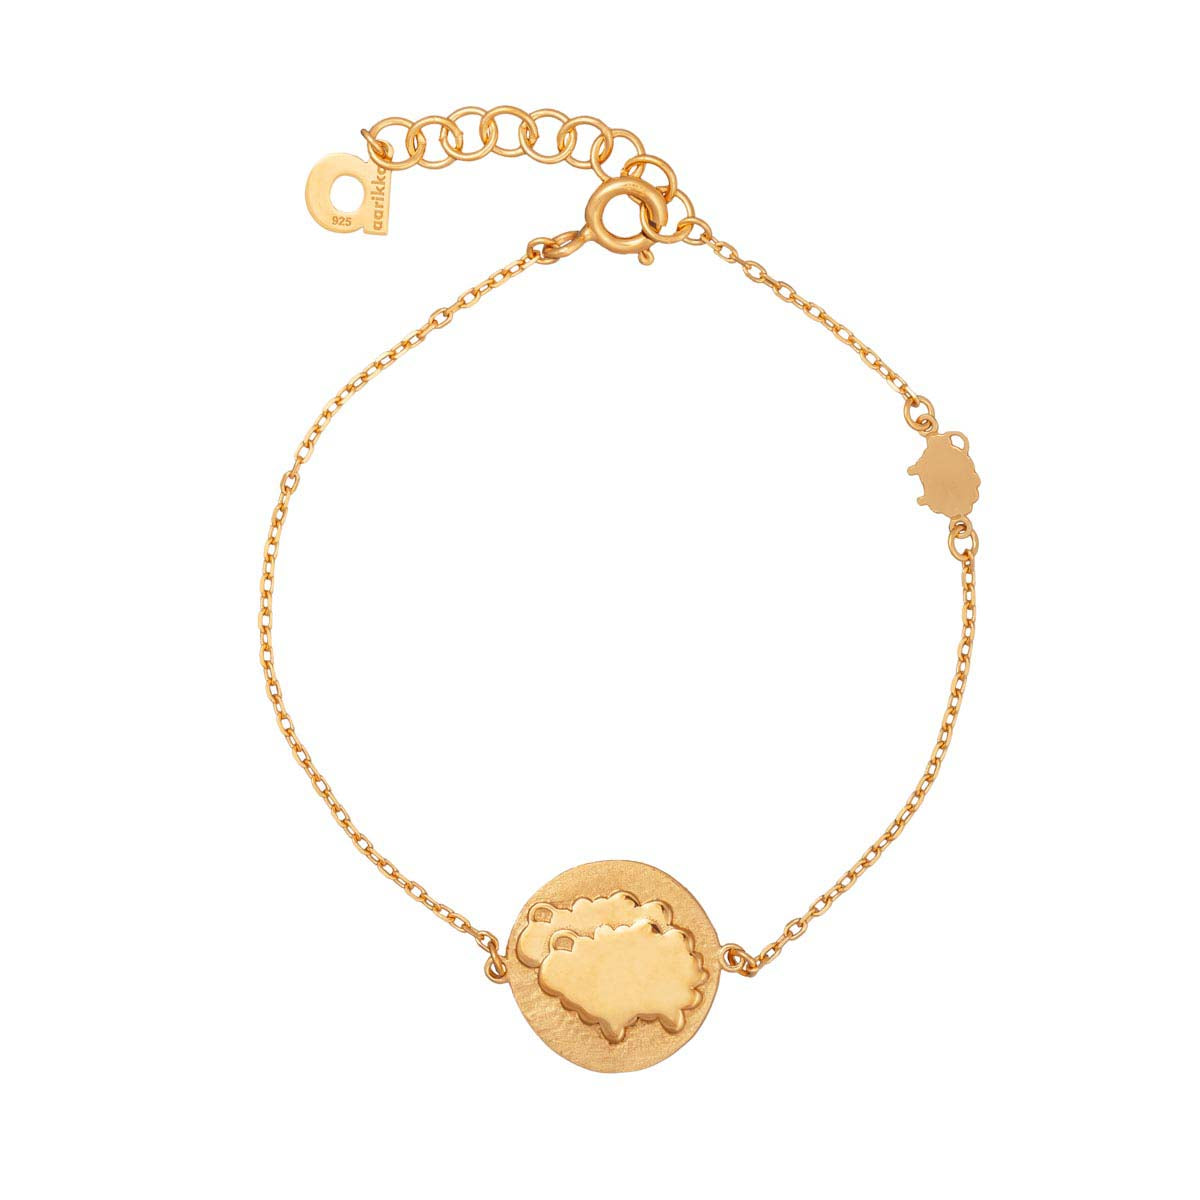 Gemini bracelet, gold-plated silver